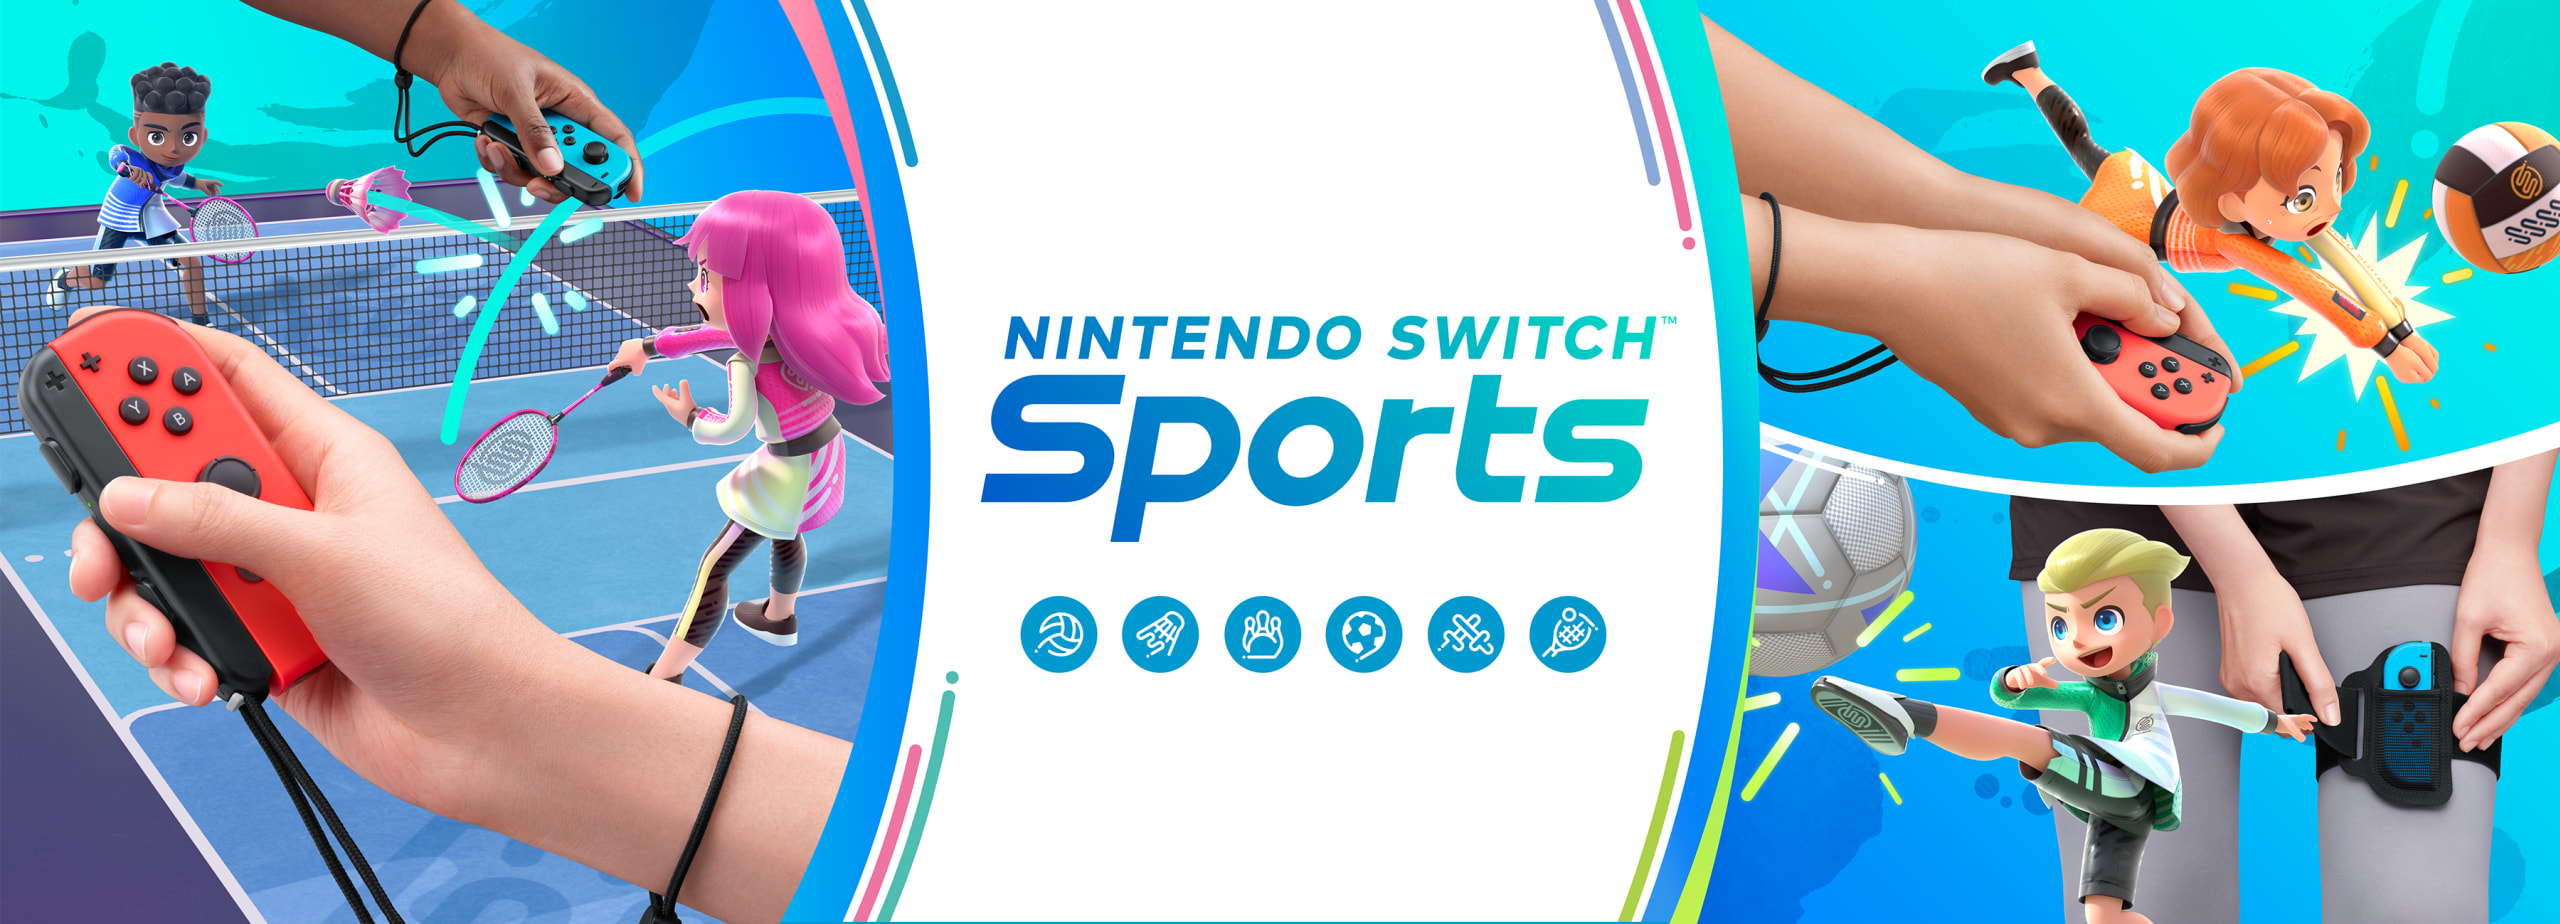 Nintendo Switch Sports - Já disponível